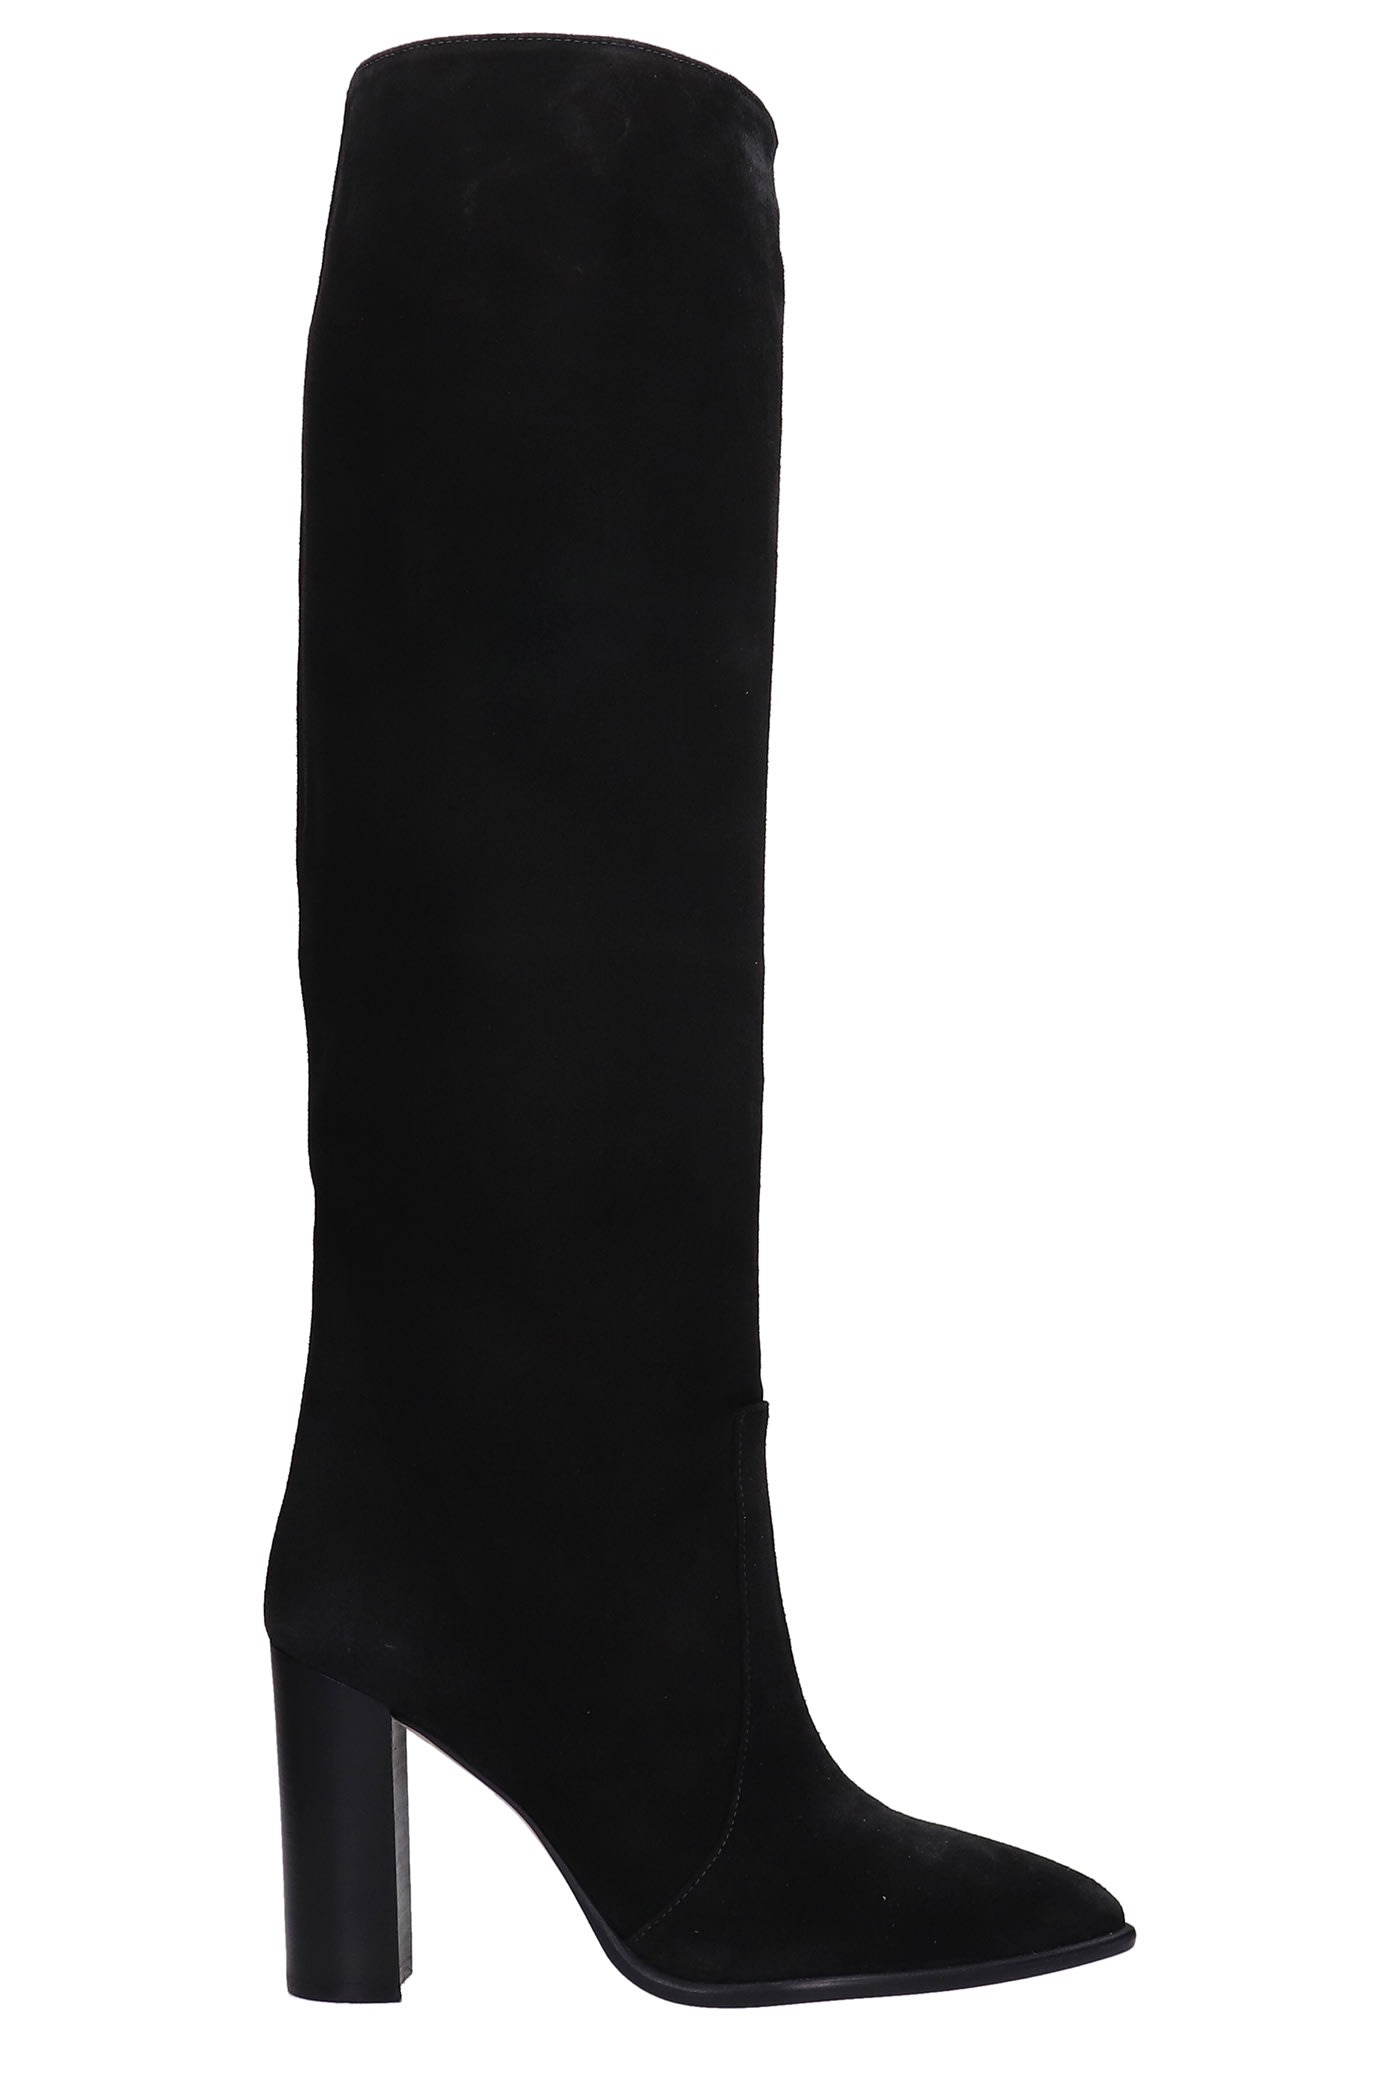 Paris Texas High Heels Boots In Black Suede